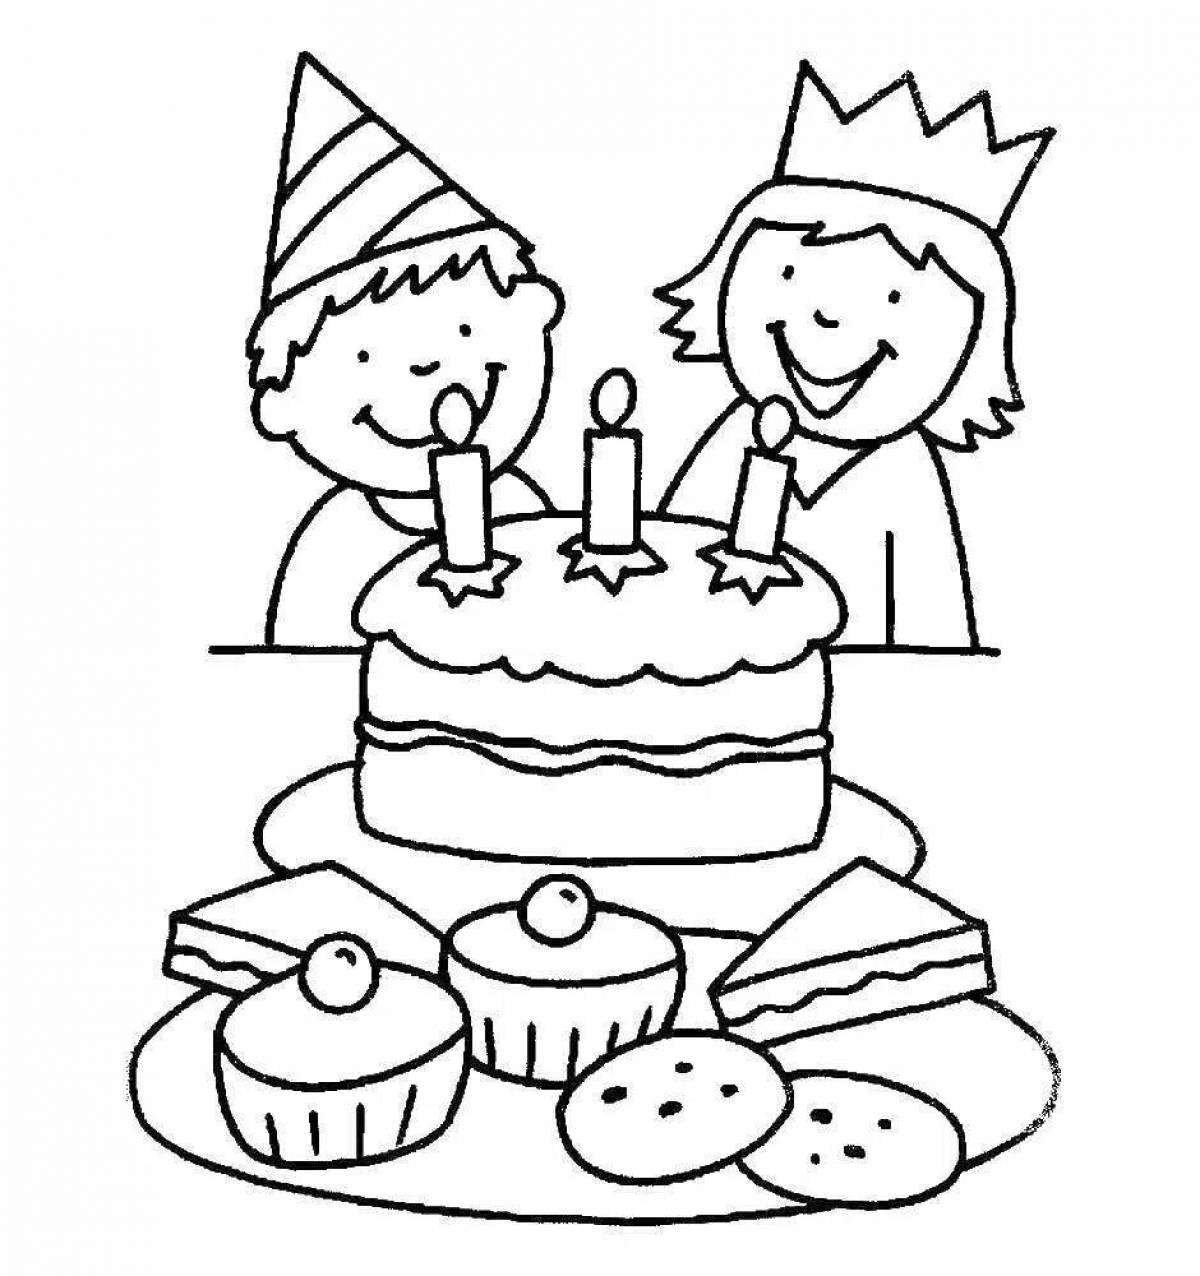 Creative birthday cake coloring book